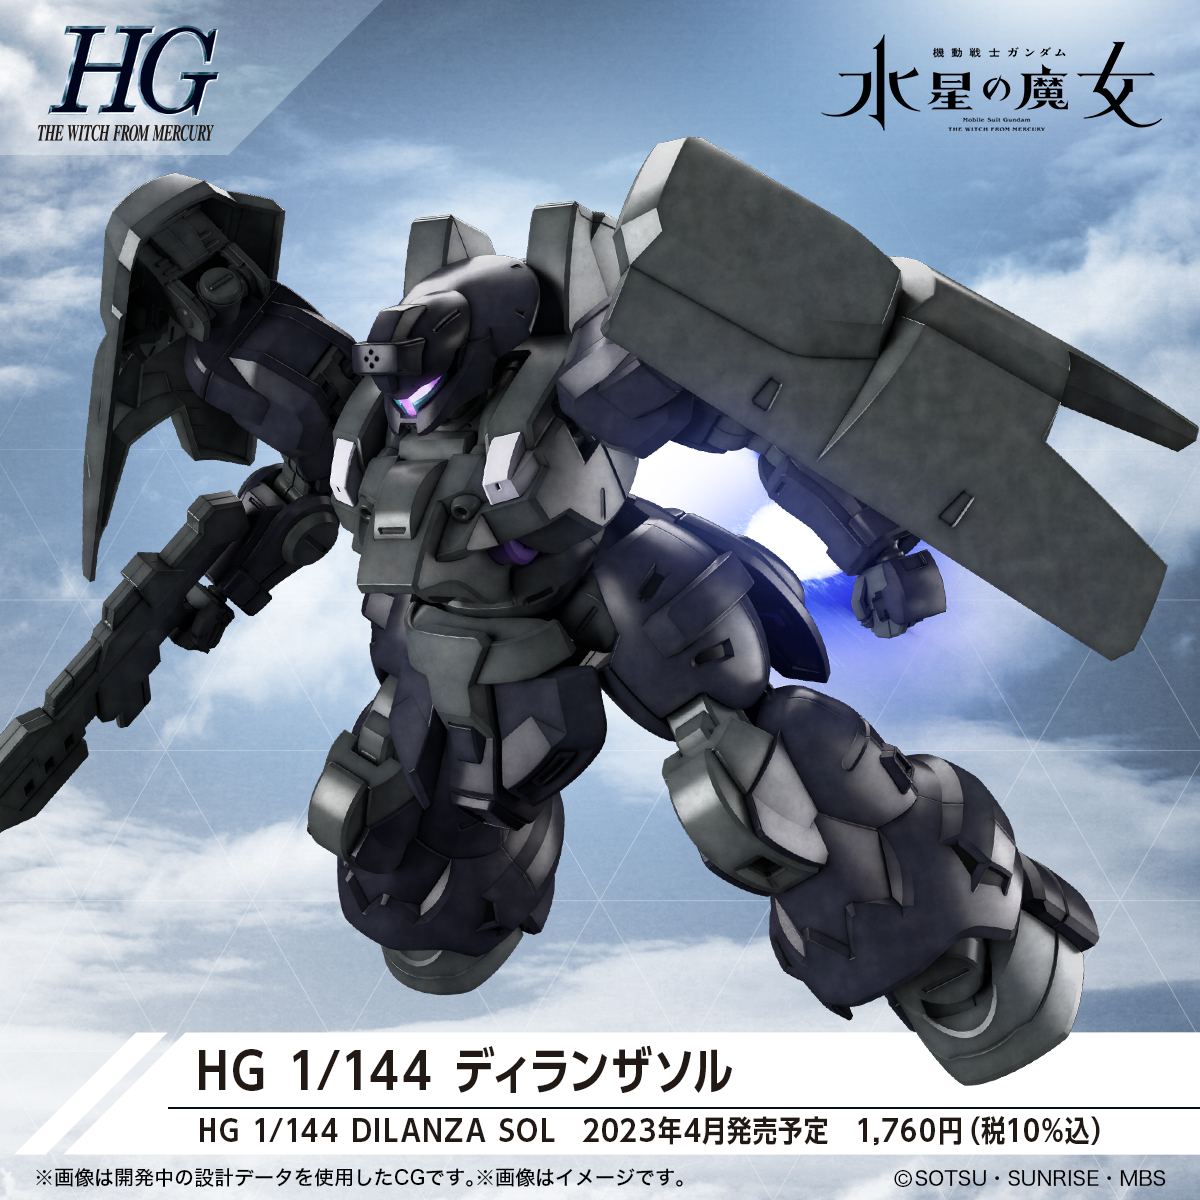 HG 1/144『ディランザソル』機動戦士ガンダム 水星の魔女 プラモデル-001